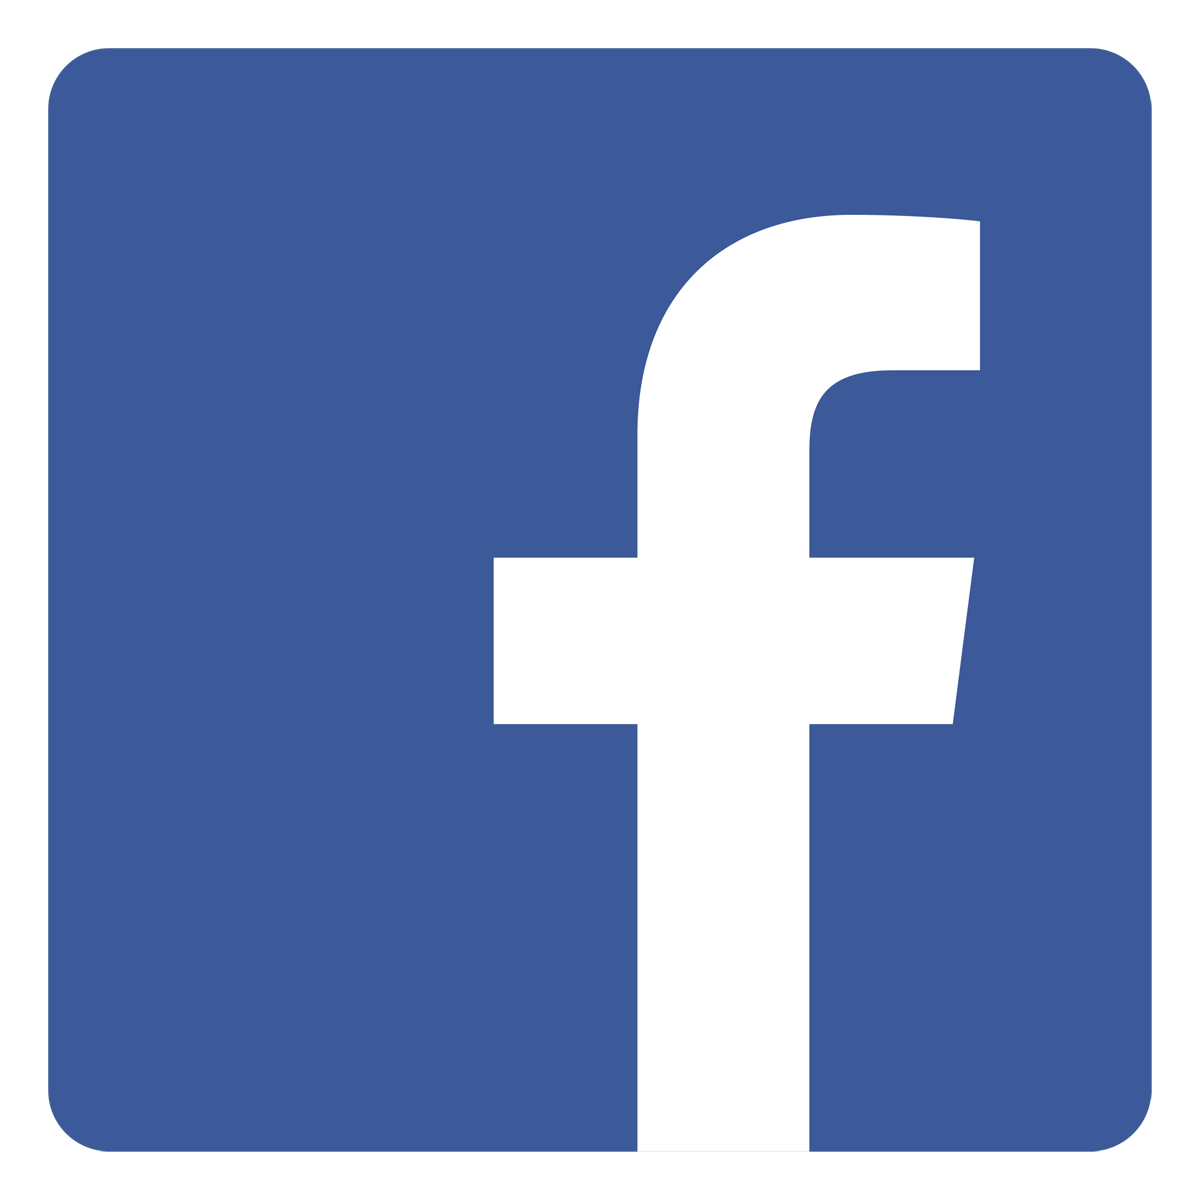 Facebook logo | NewsFile Online